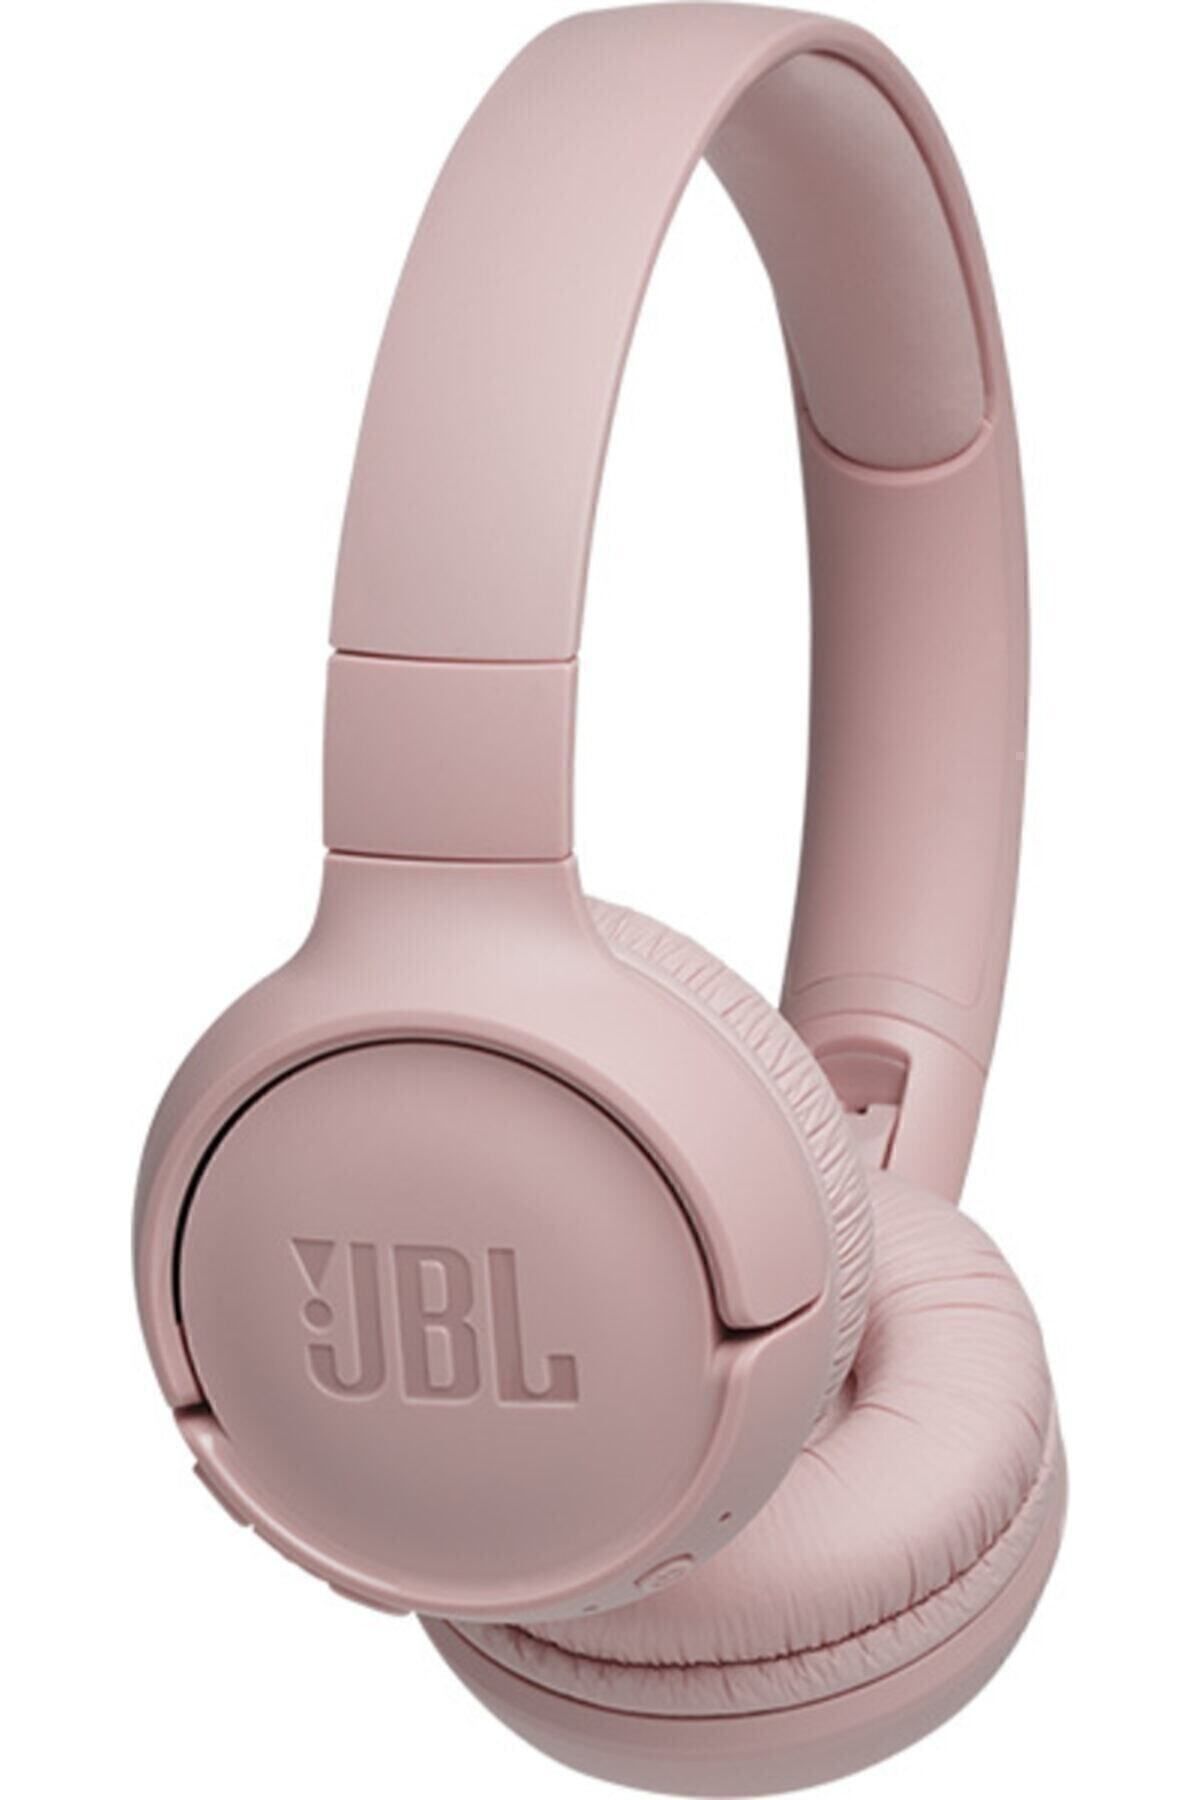 JBL 560BT Kulak Üstü Bluetooth Kulaklık Pembe